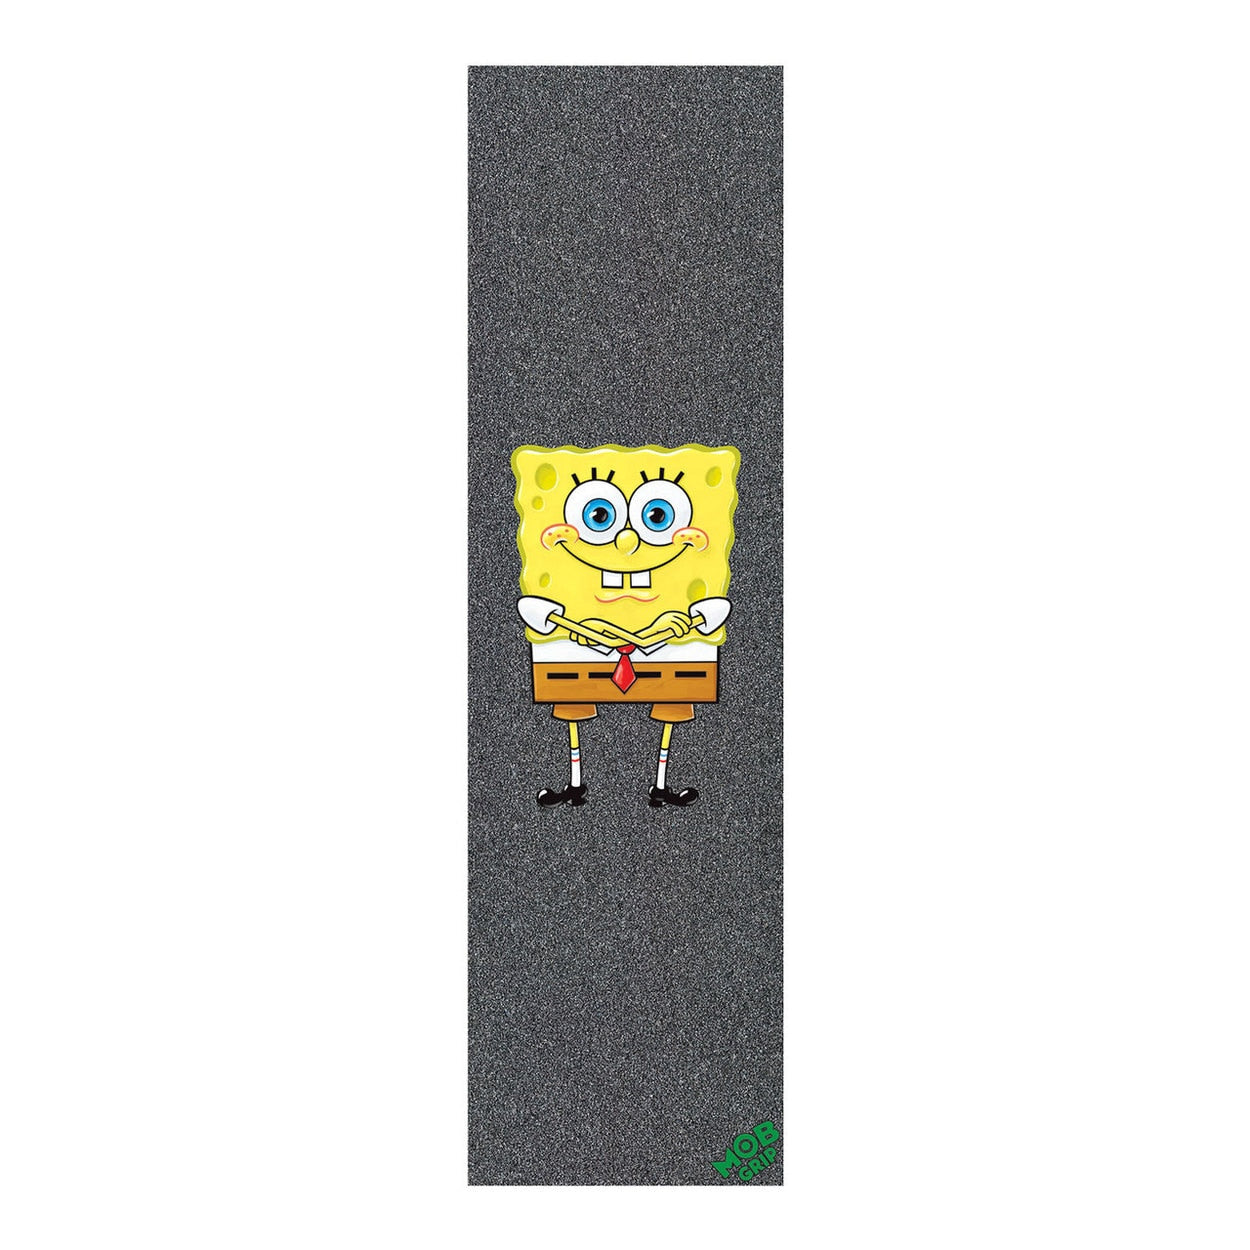 Mob Spongbob SquarePants Skateboard Grip Tape - Little Spongebob